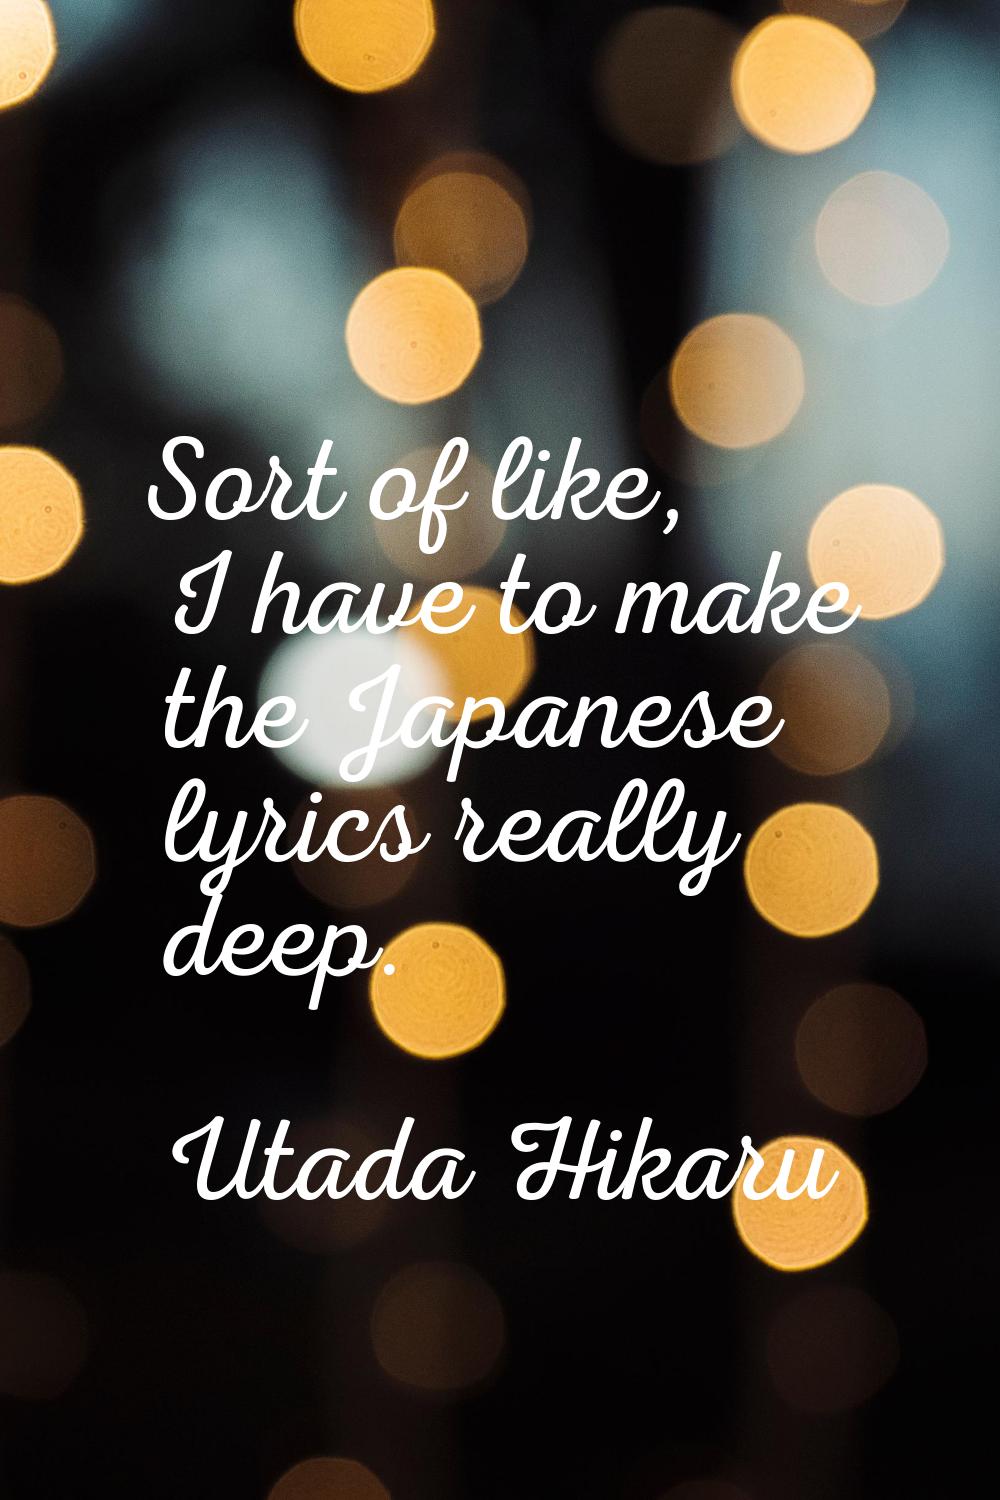 Sort of like, I have to make the Japanese lyrics really deep.